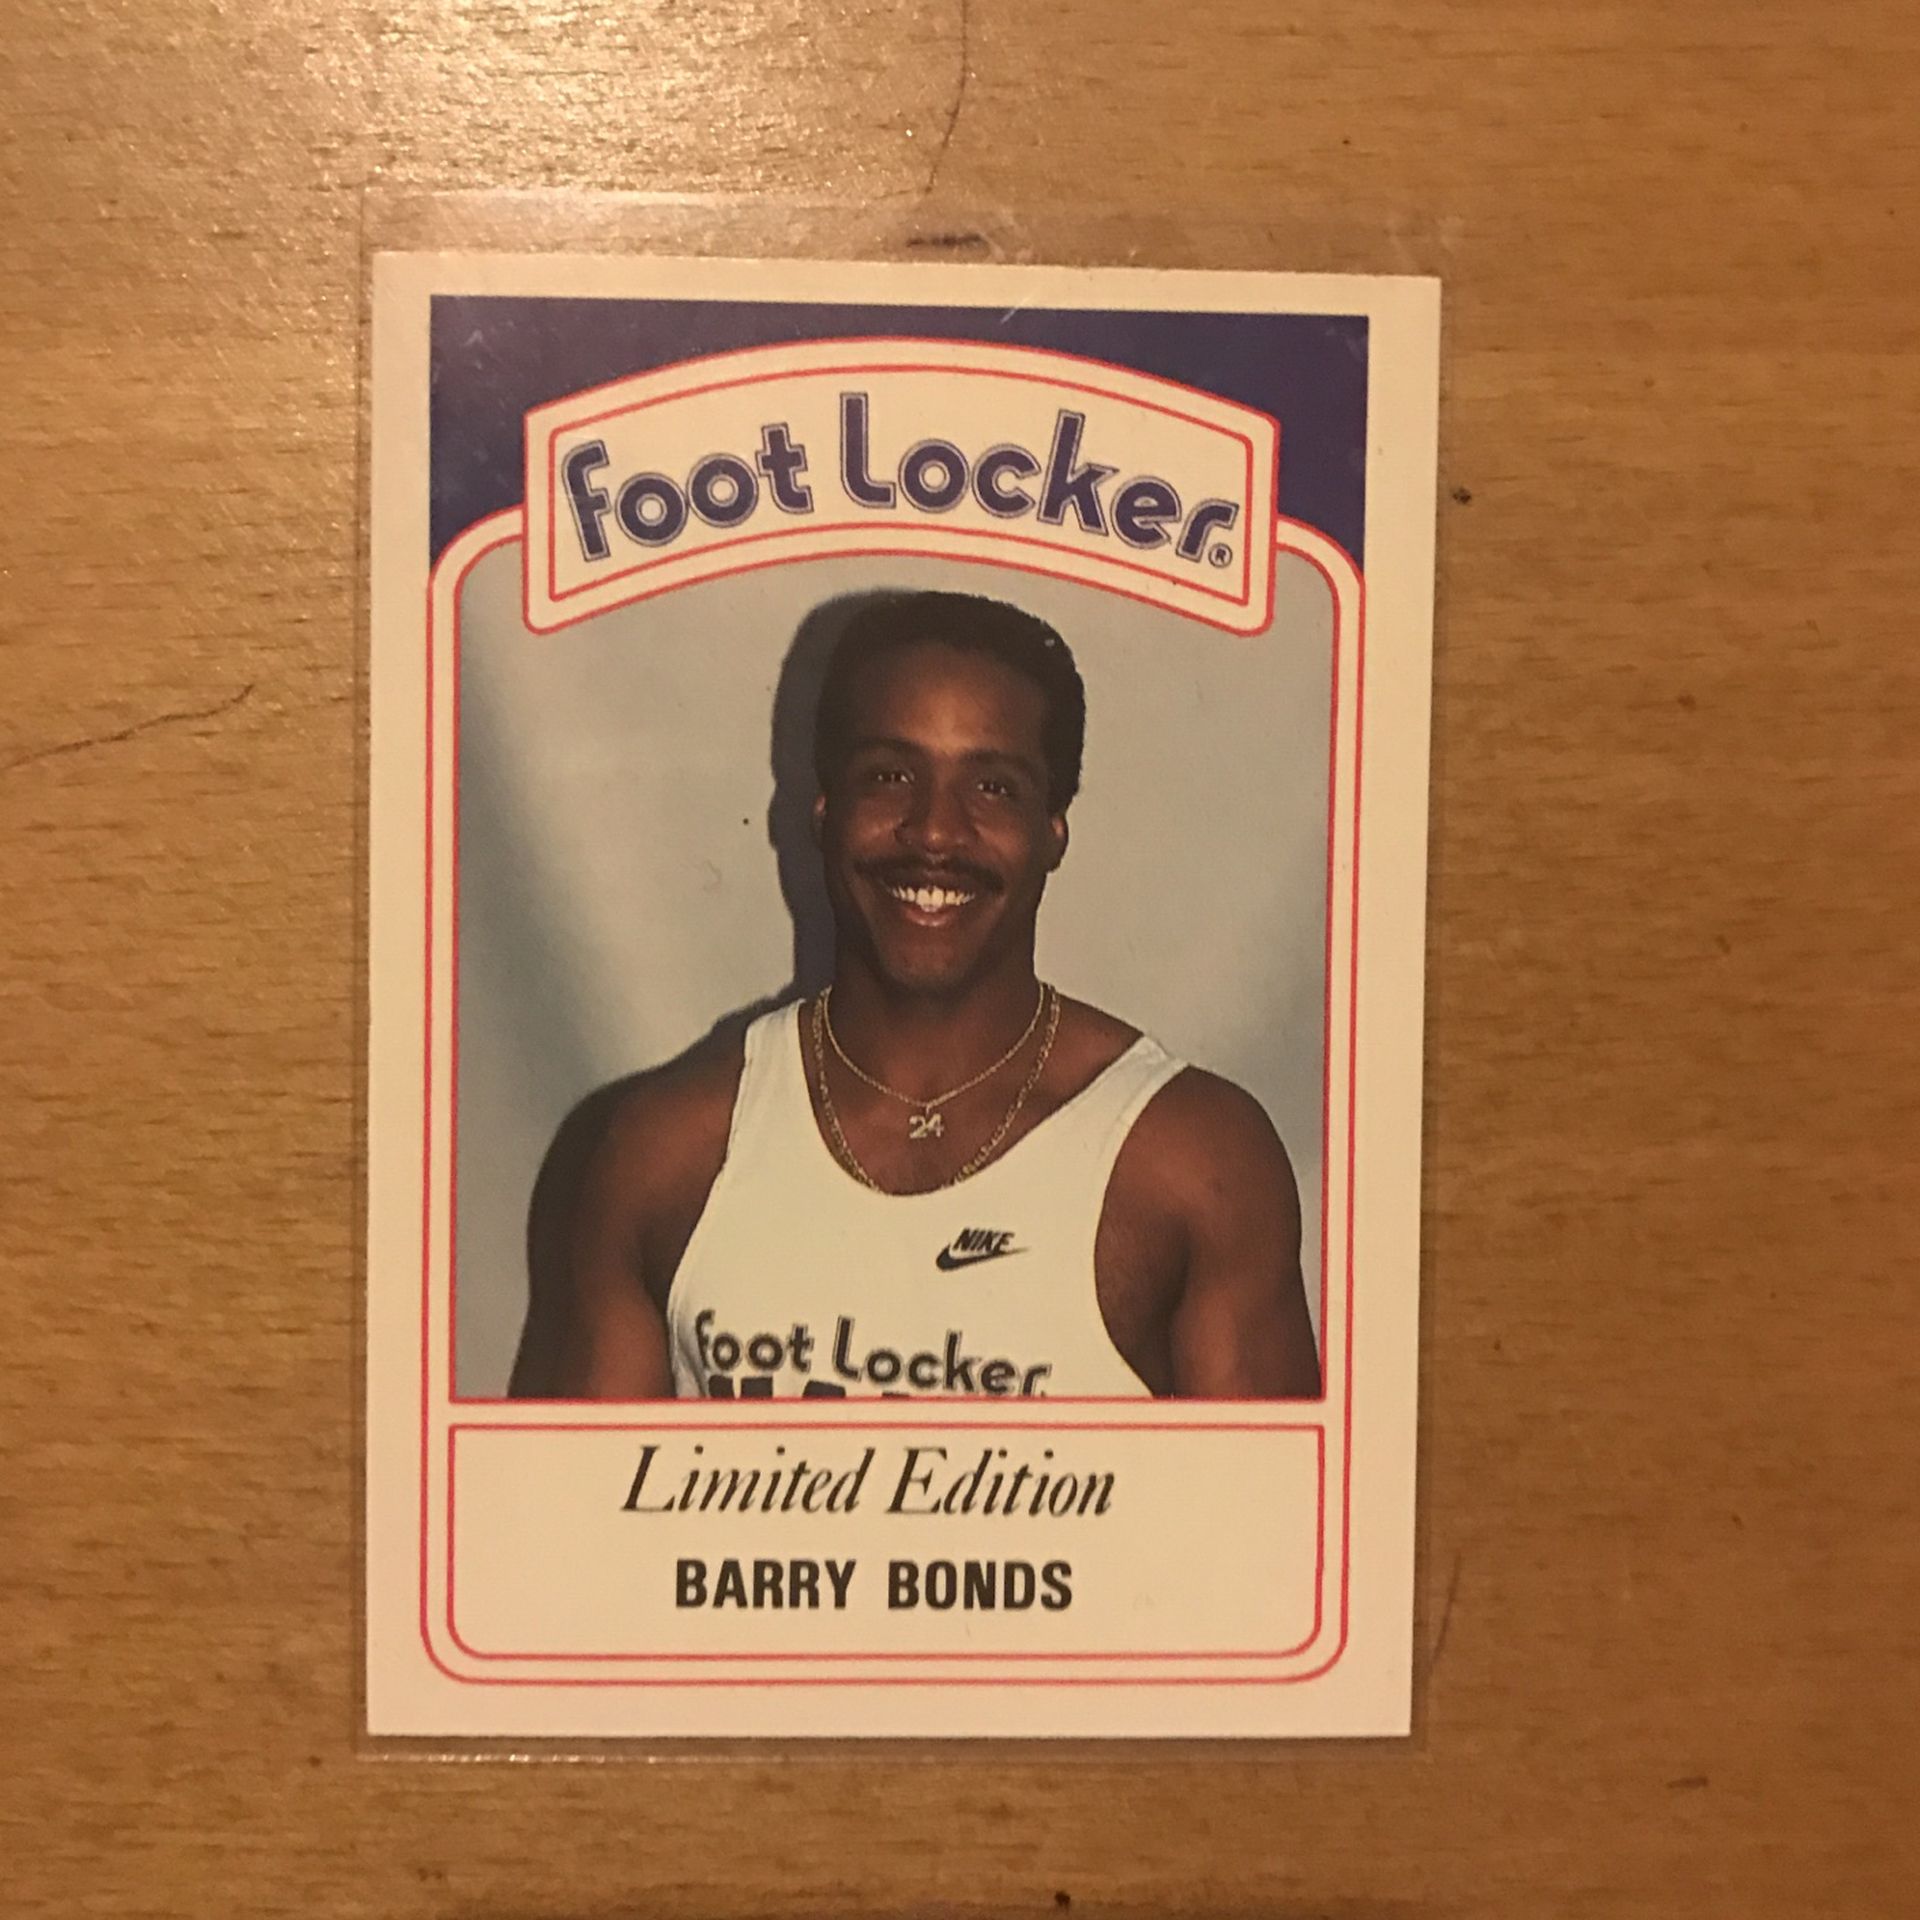 1991 BARRY BONDS FOOT LOCKER CARD